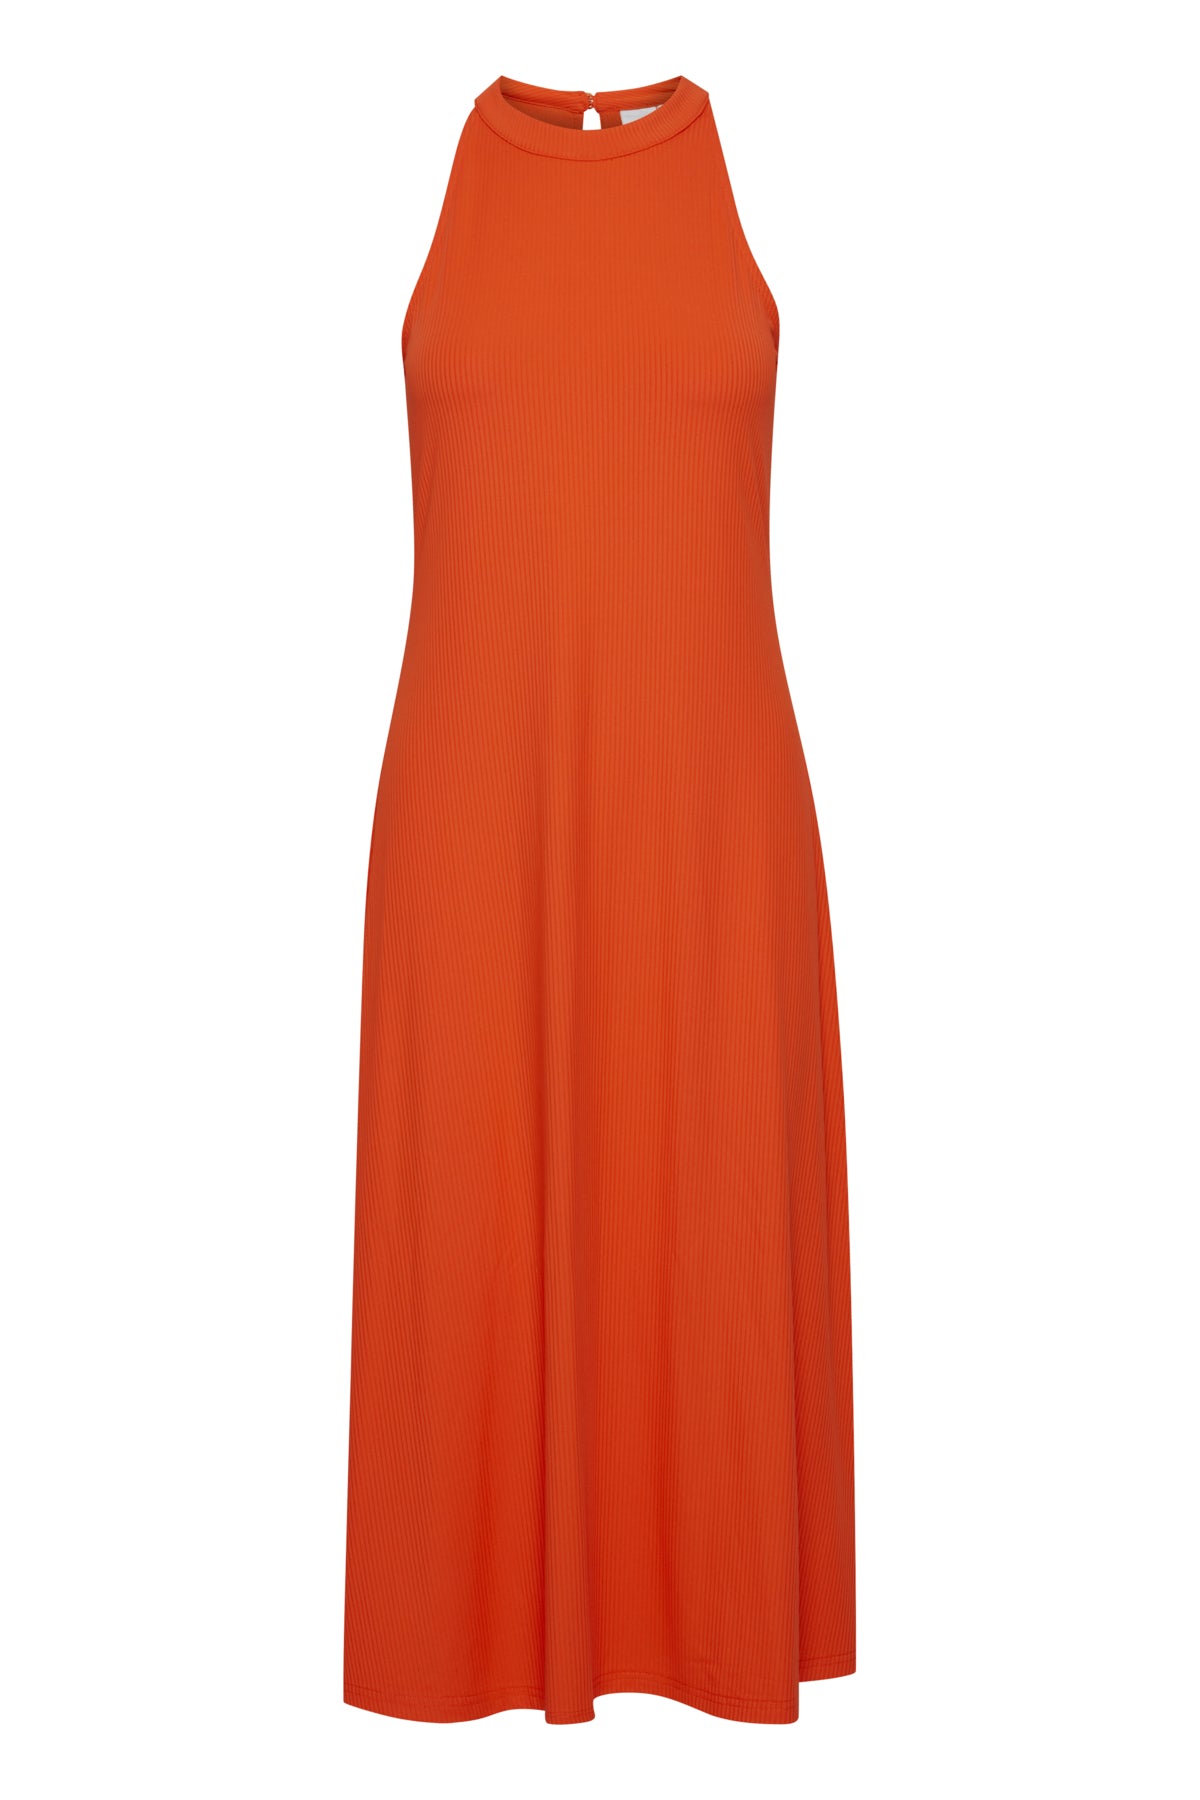 Nari Dress (Mandarin Red)